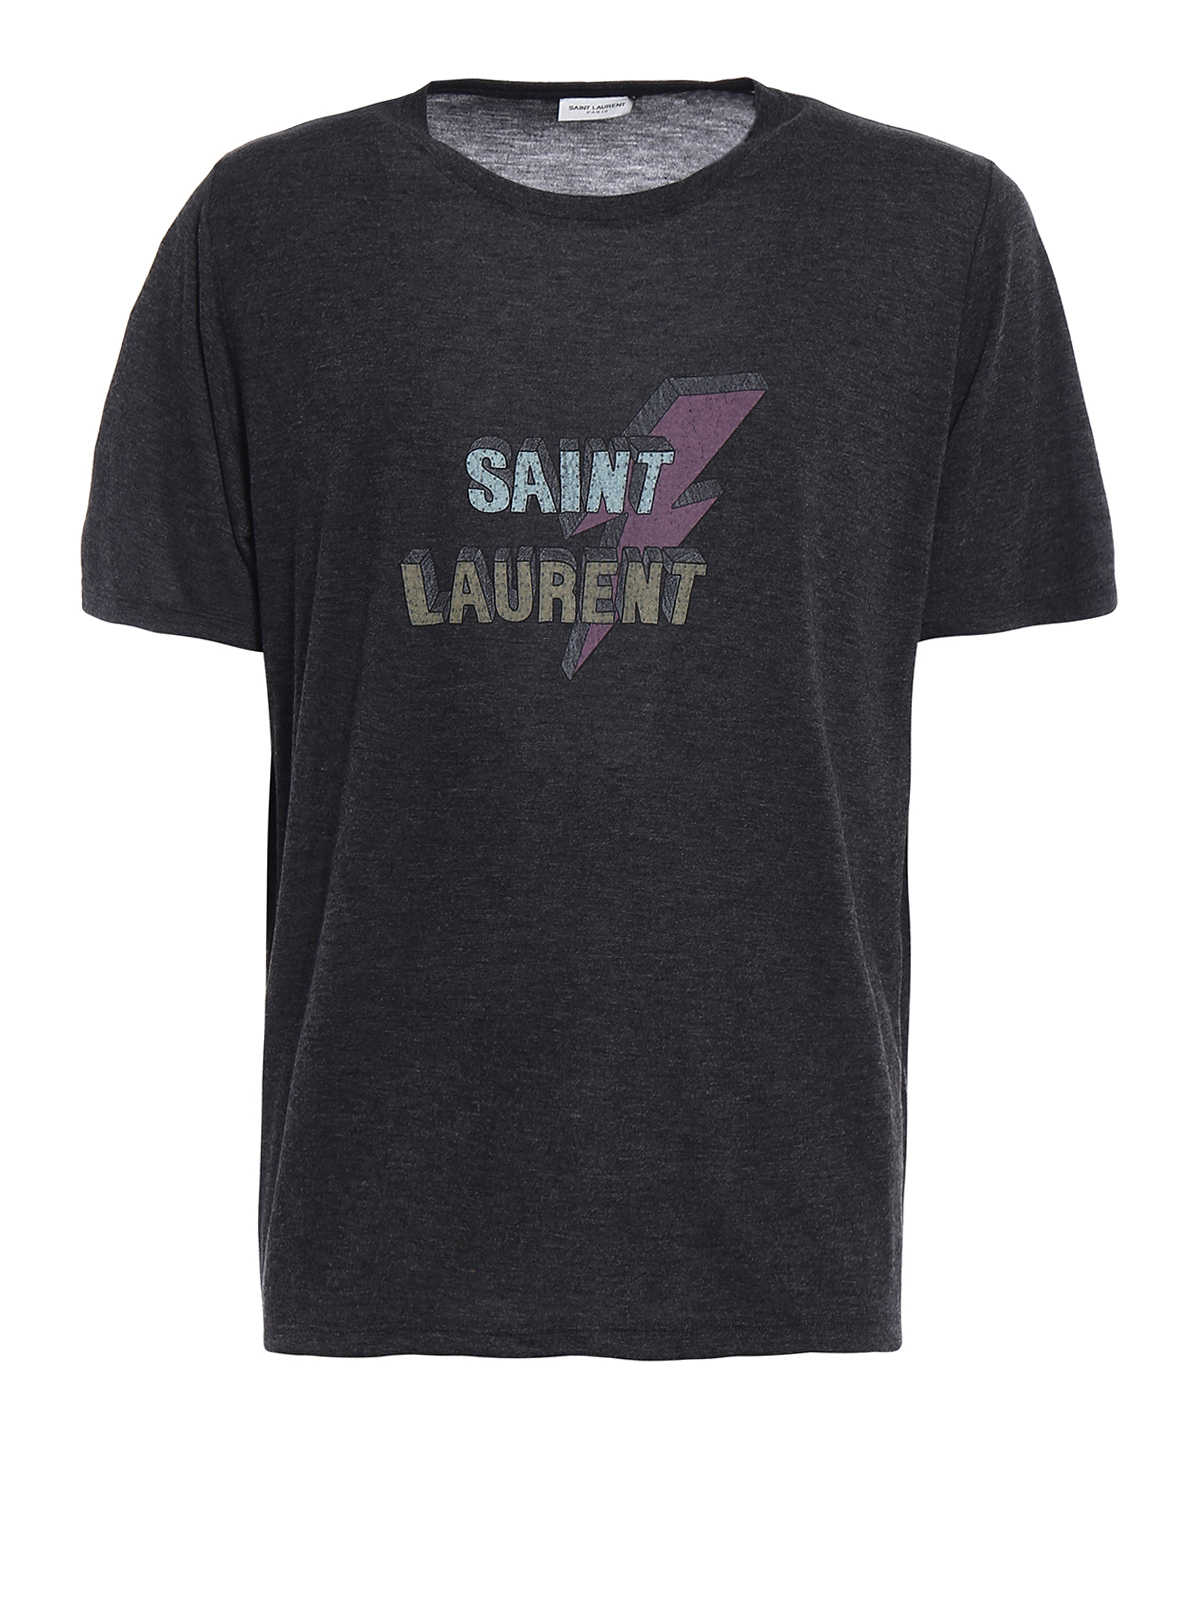 Lightning bolt logo print T-shirt by Saint Laurent - t-shirts | iKRIX